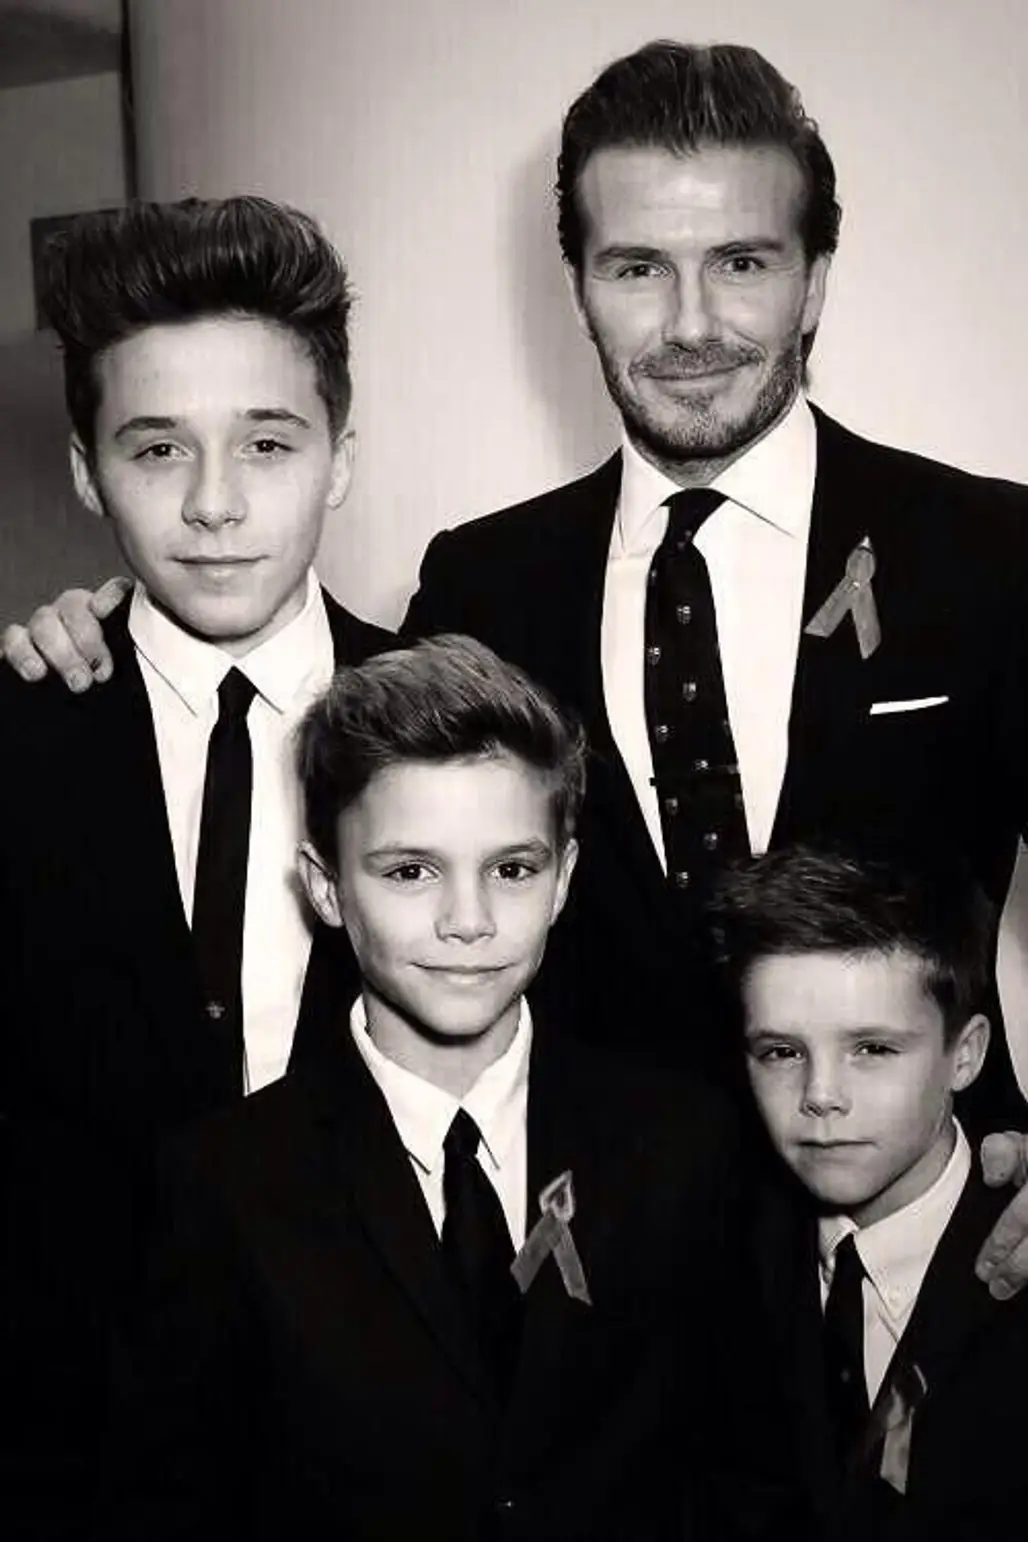 The Beckham Boys (what a Gene Pool!)